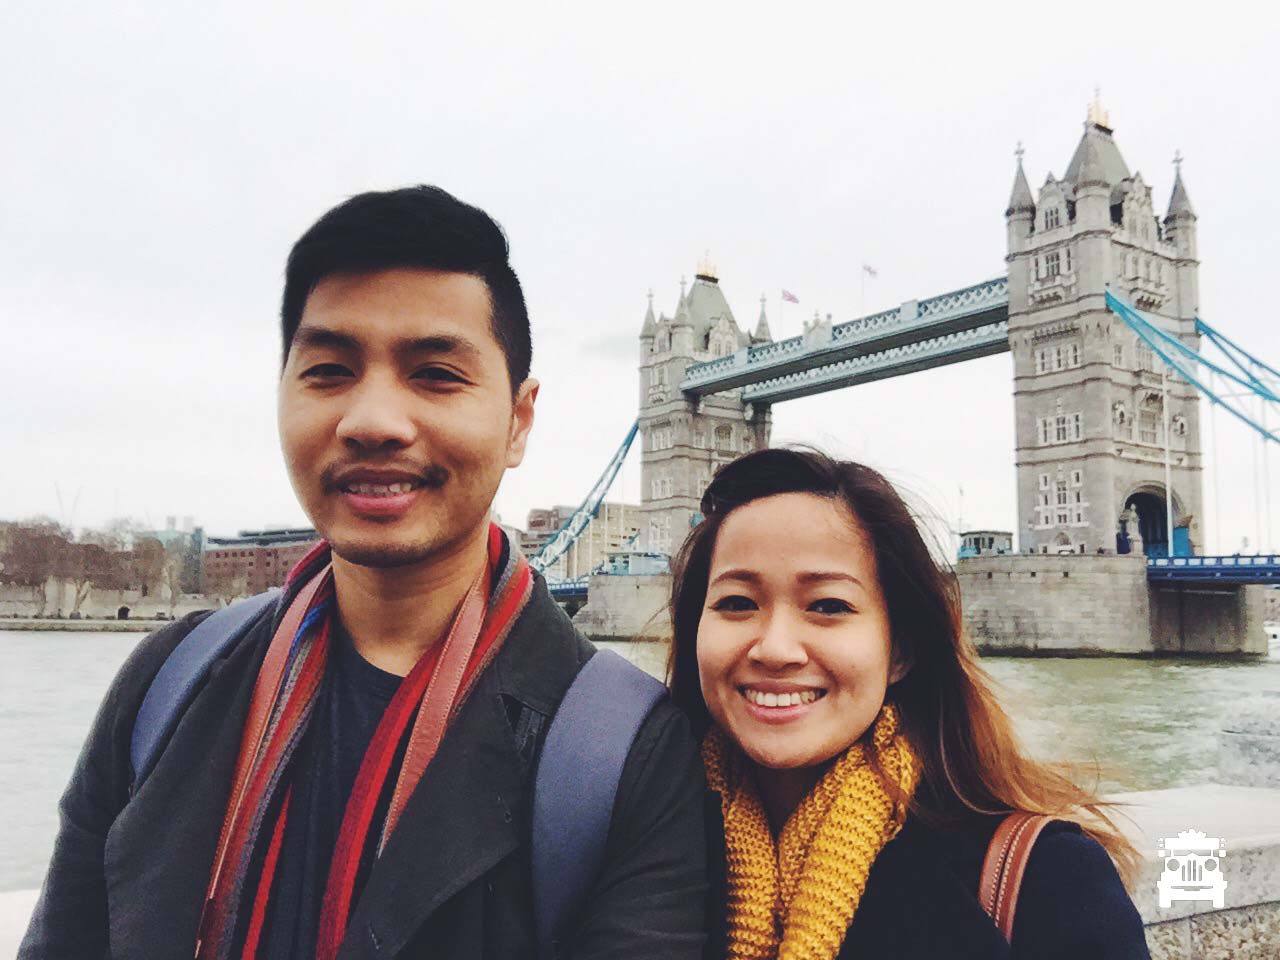 Selfie at the Tower Bridge